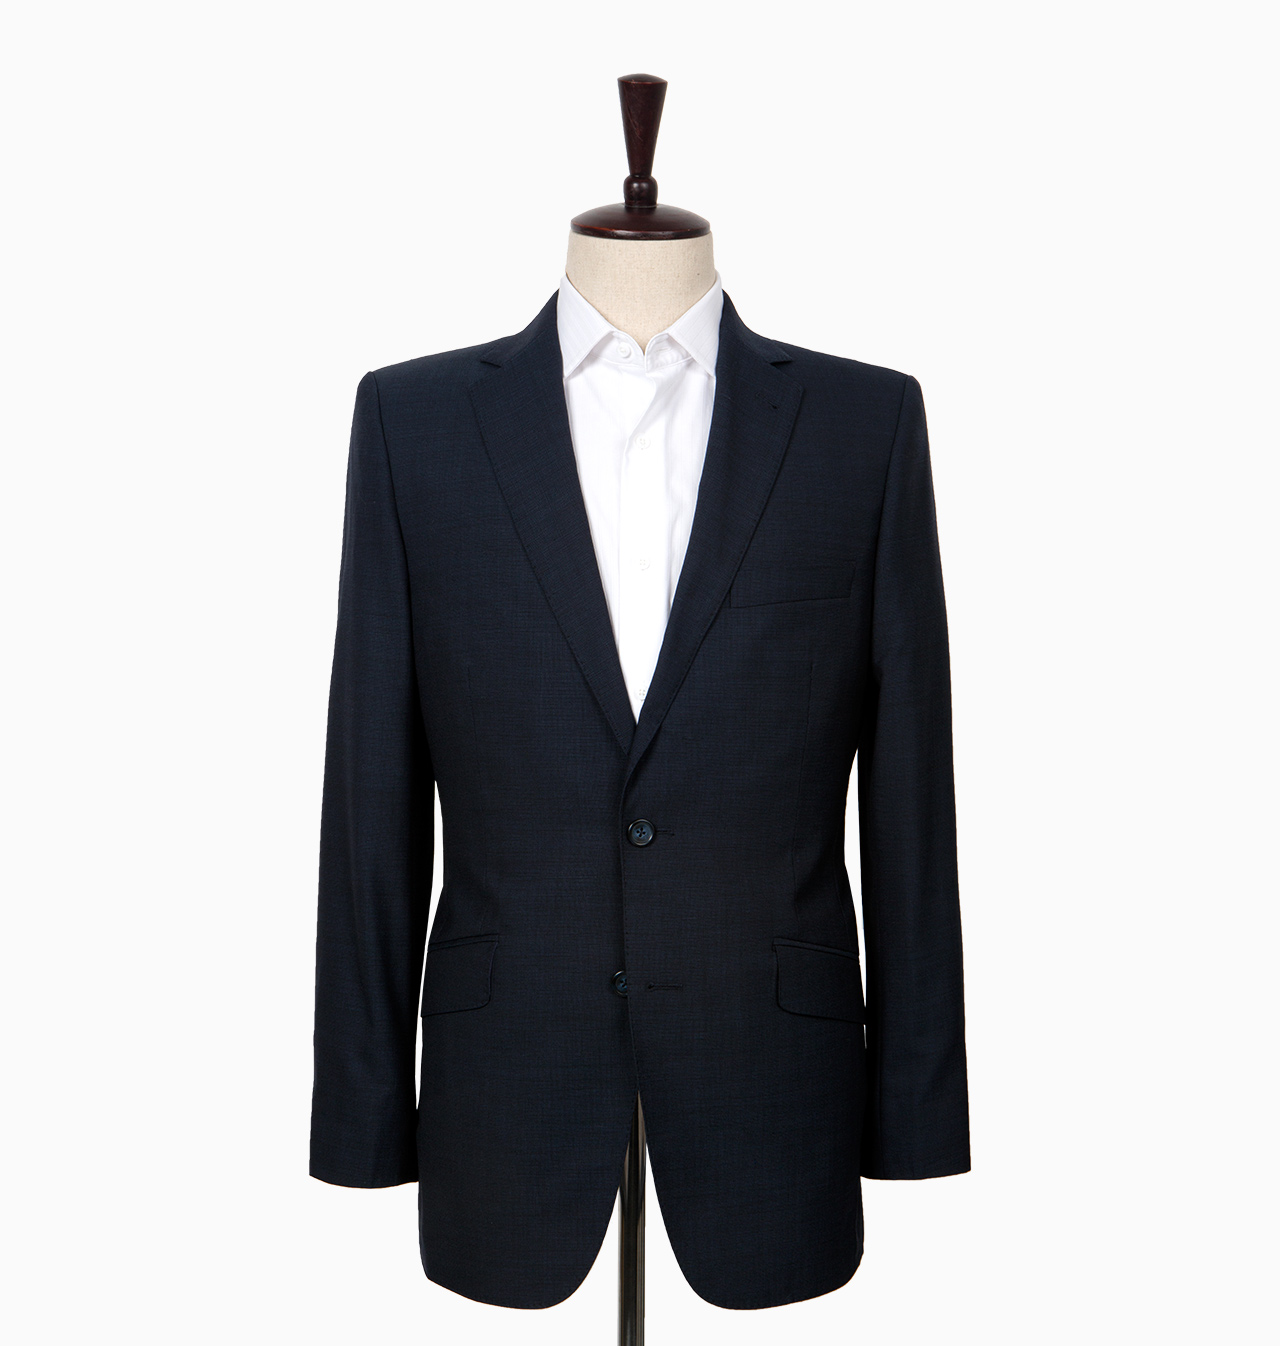 Blank Label | Award Winning Men's Custom Suits, Dress Shirts